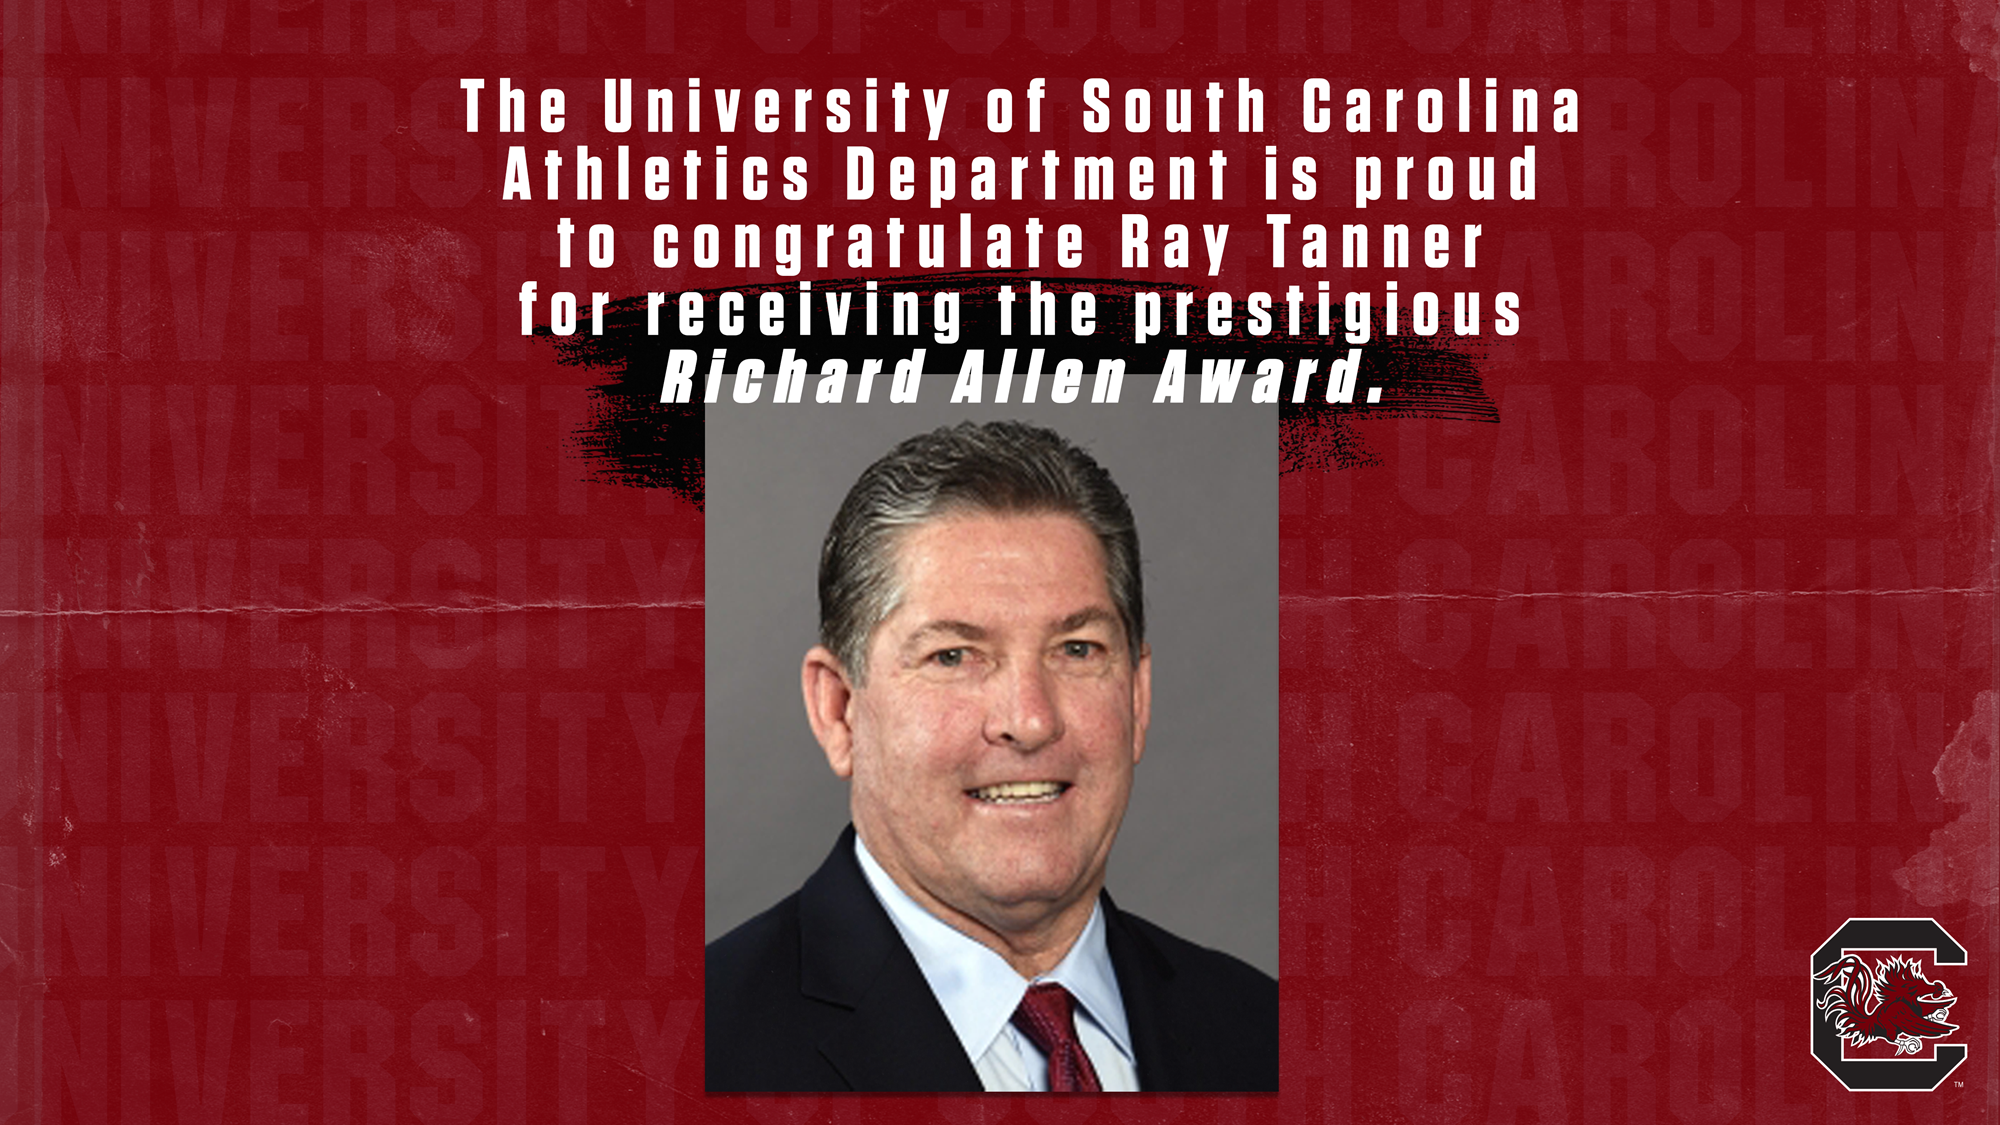 Ray Tanner to Receive Richard Allen Award